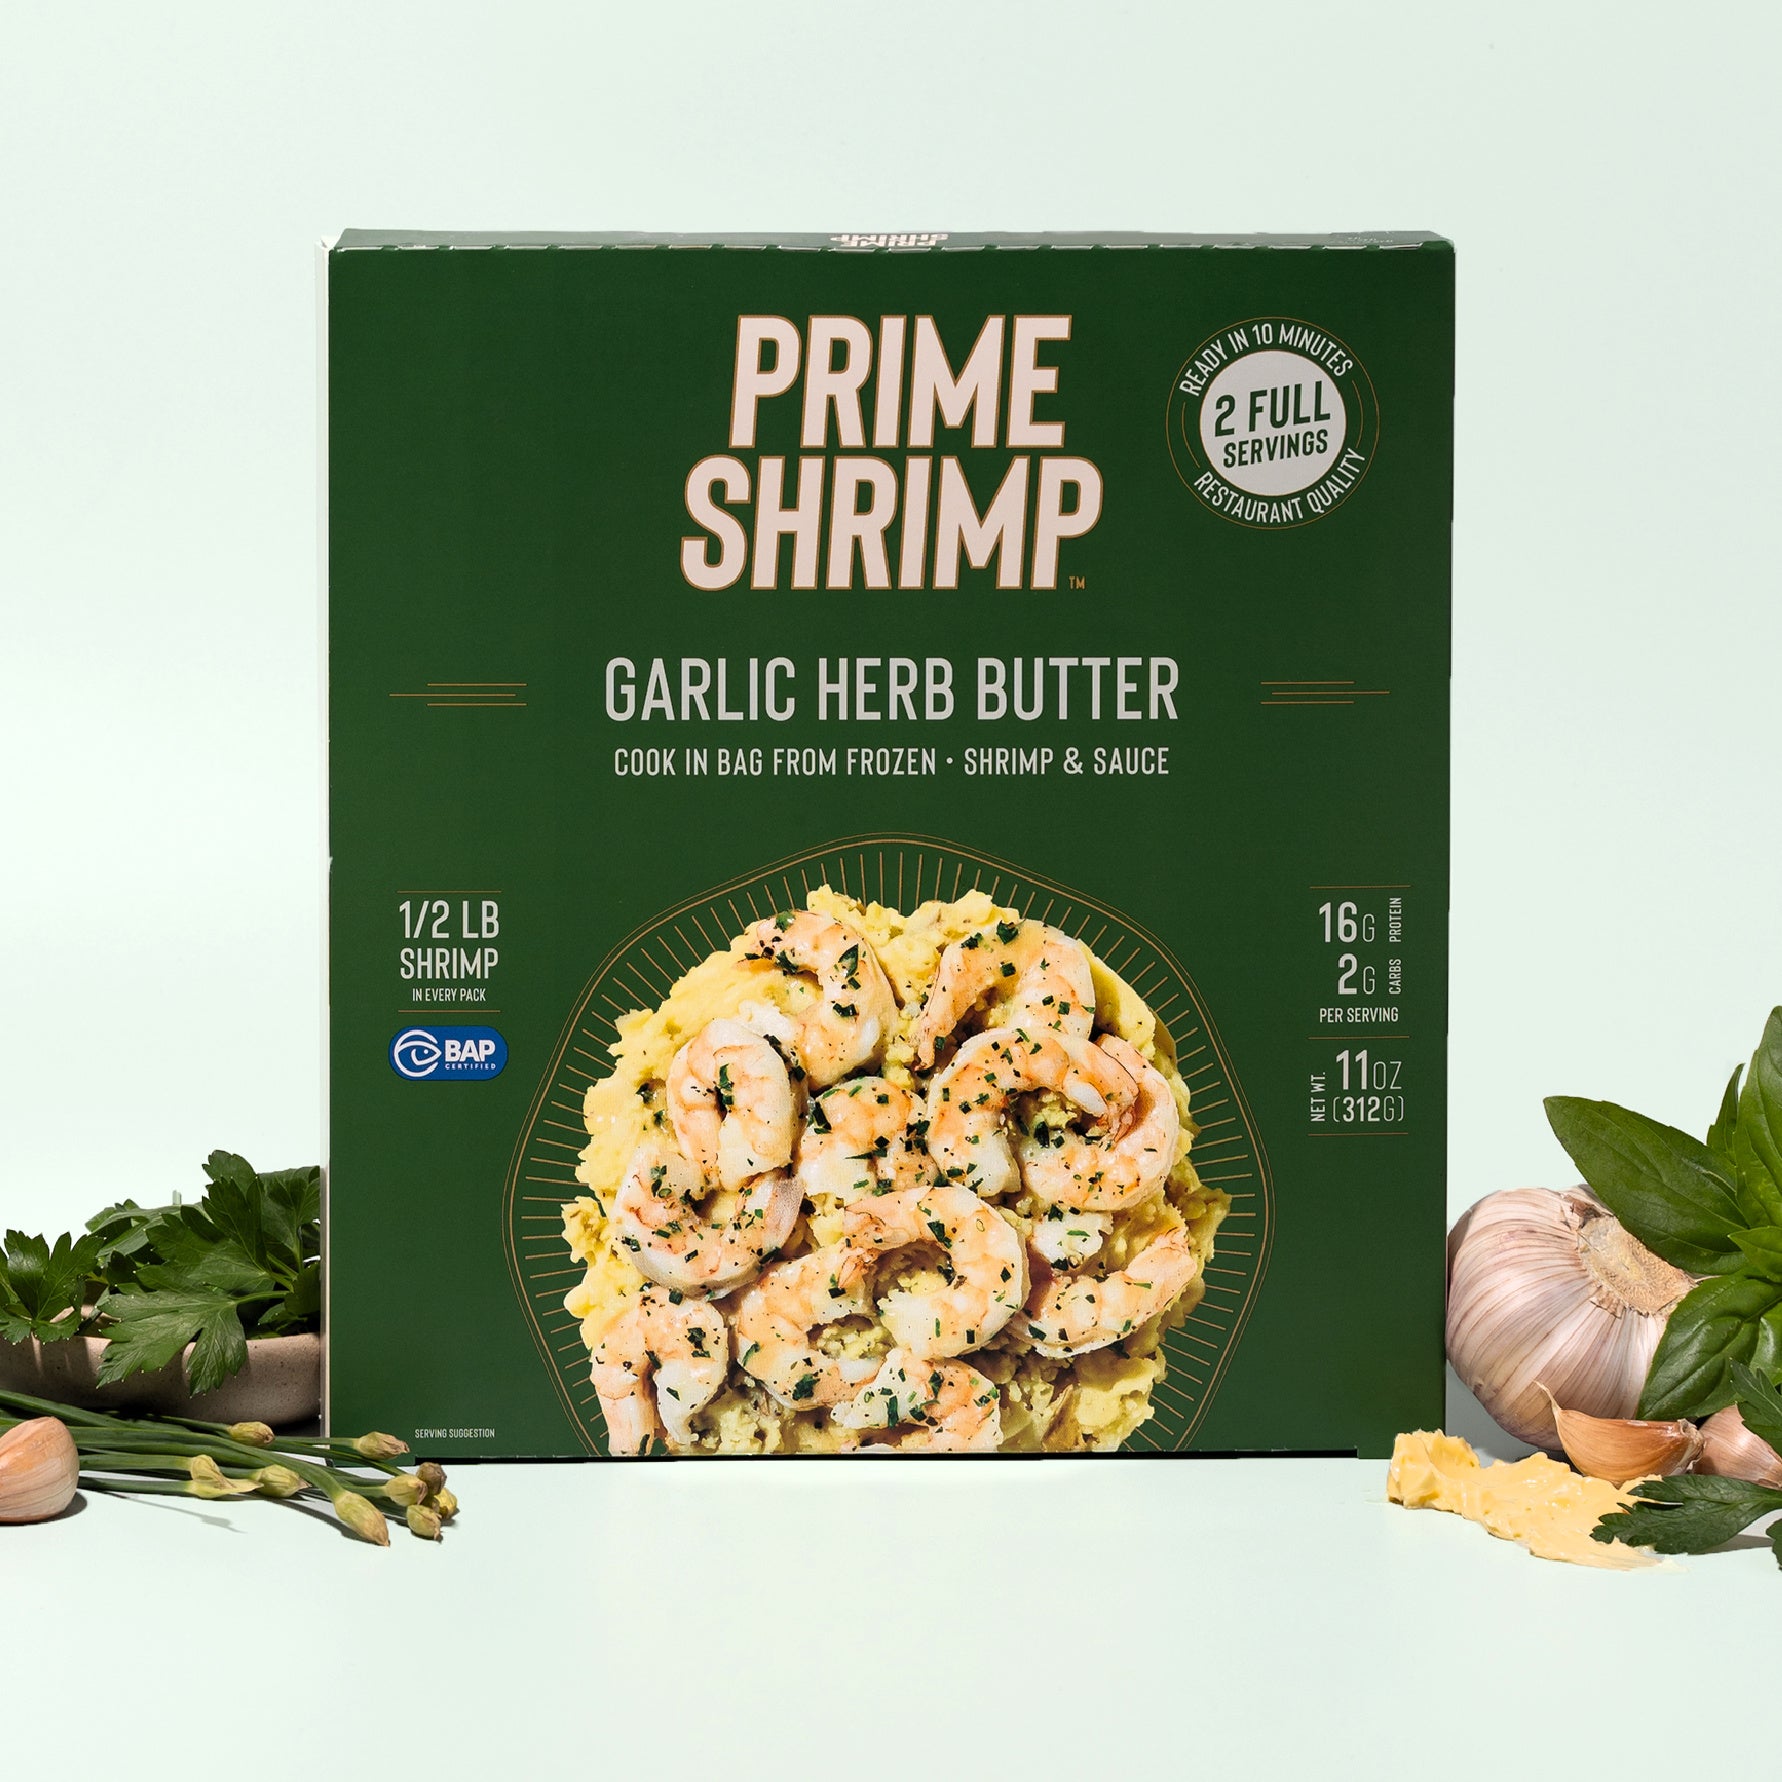 Prime-Shrimp-Garlic-Herb-Butter-_-NWK-Creative-3_1.jpg